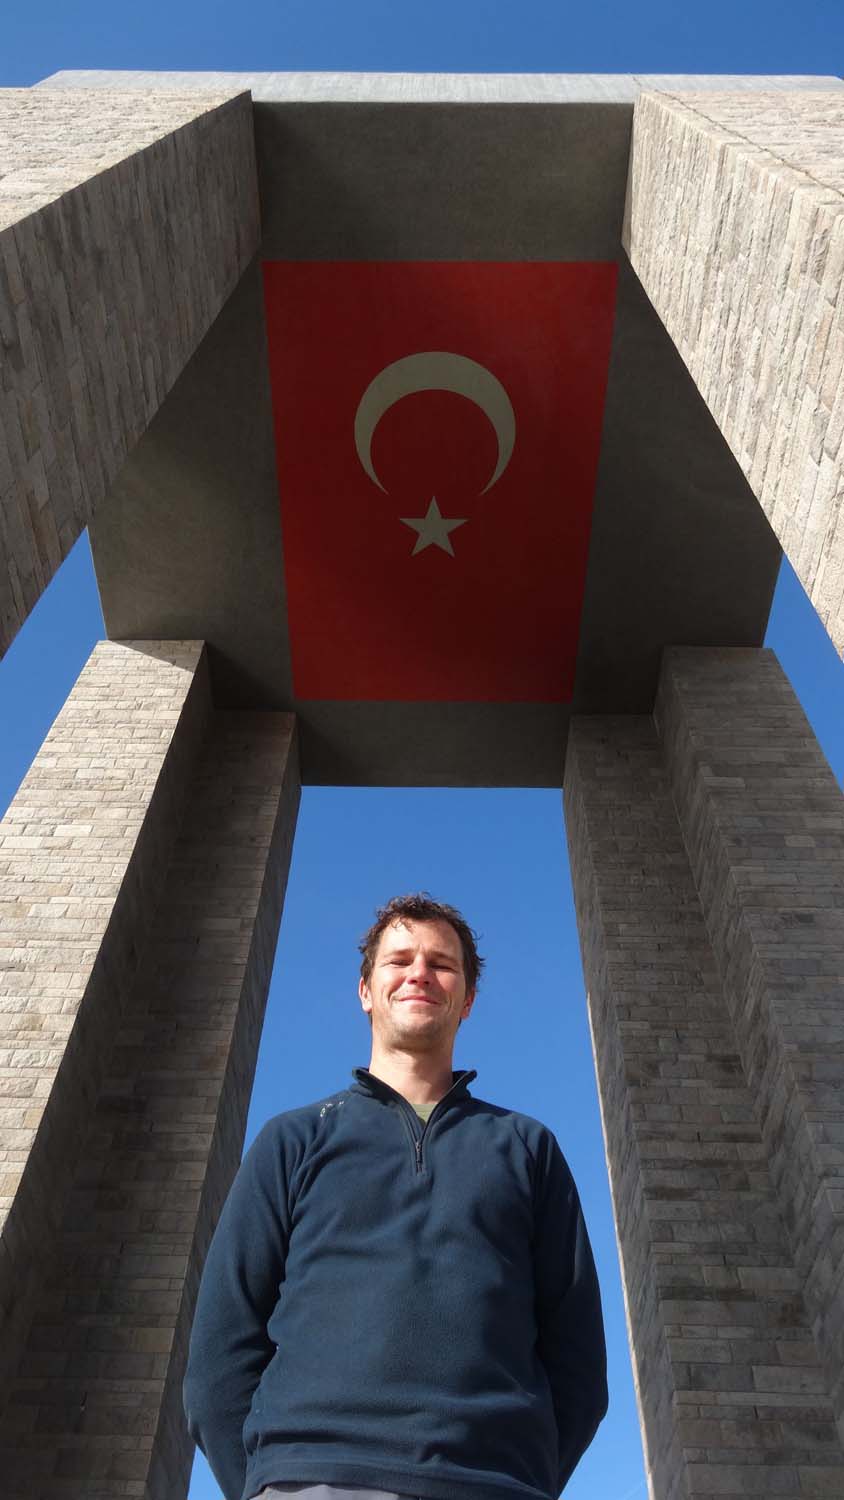 the impressive Turkish war memorial at Gallipoli